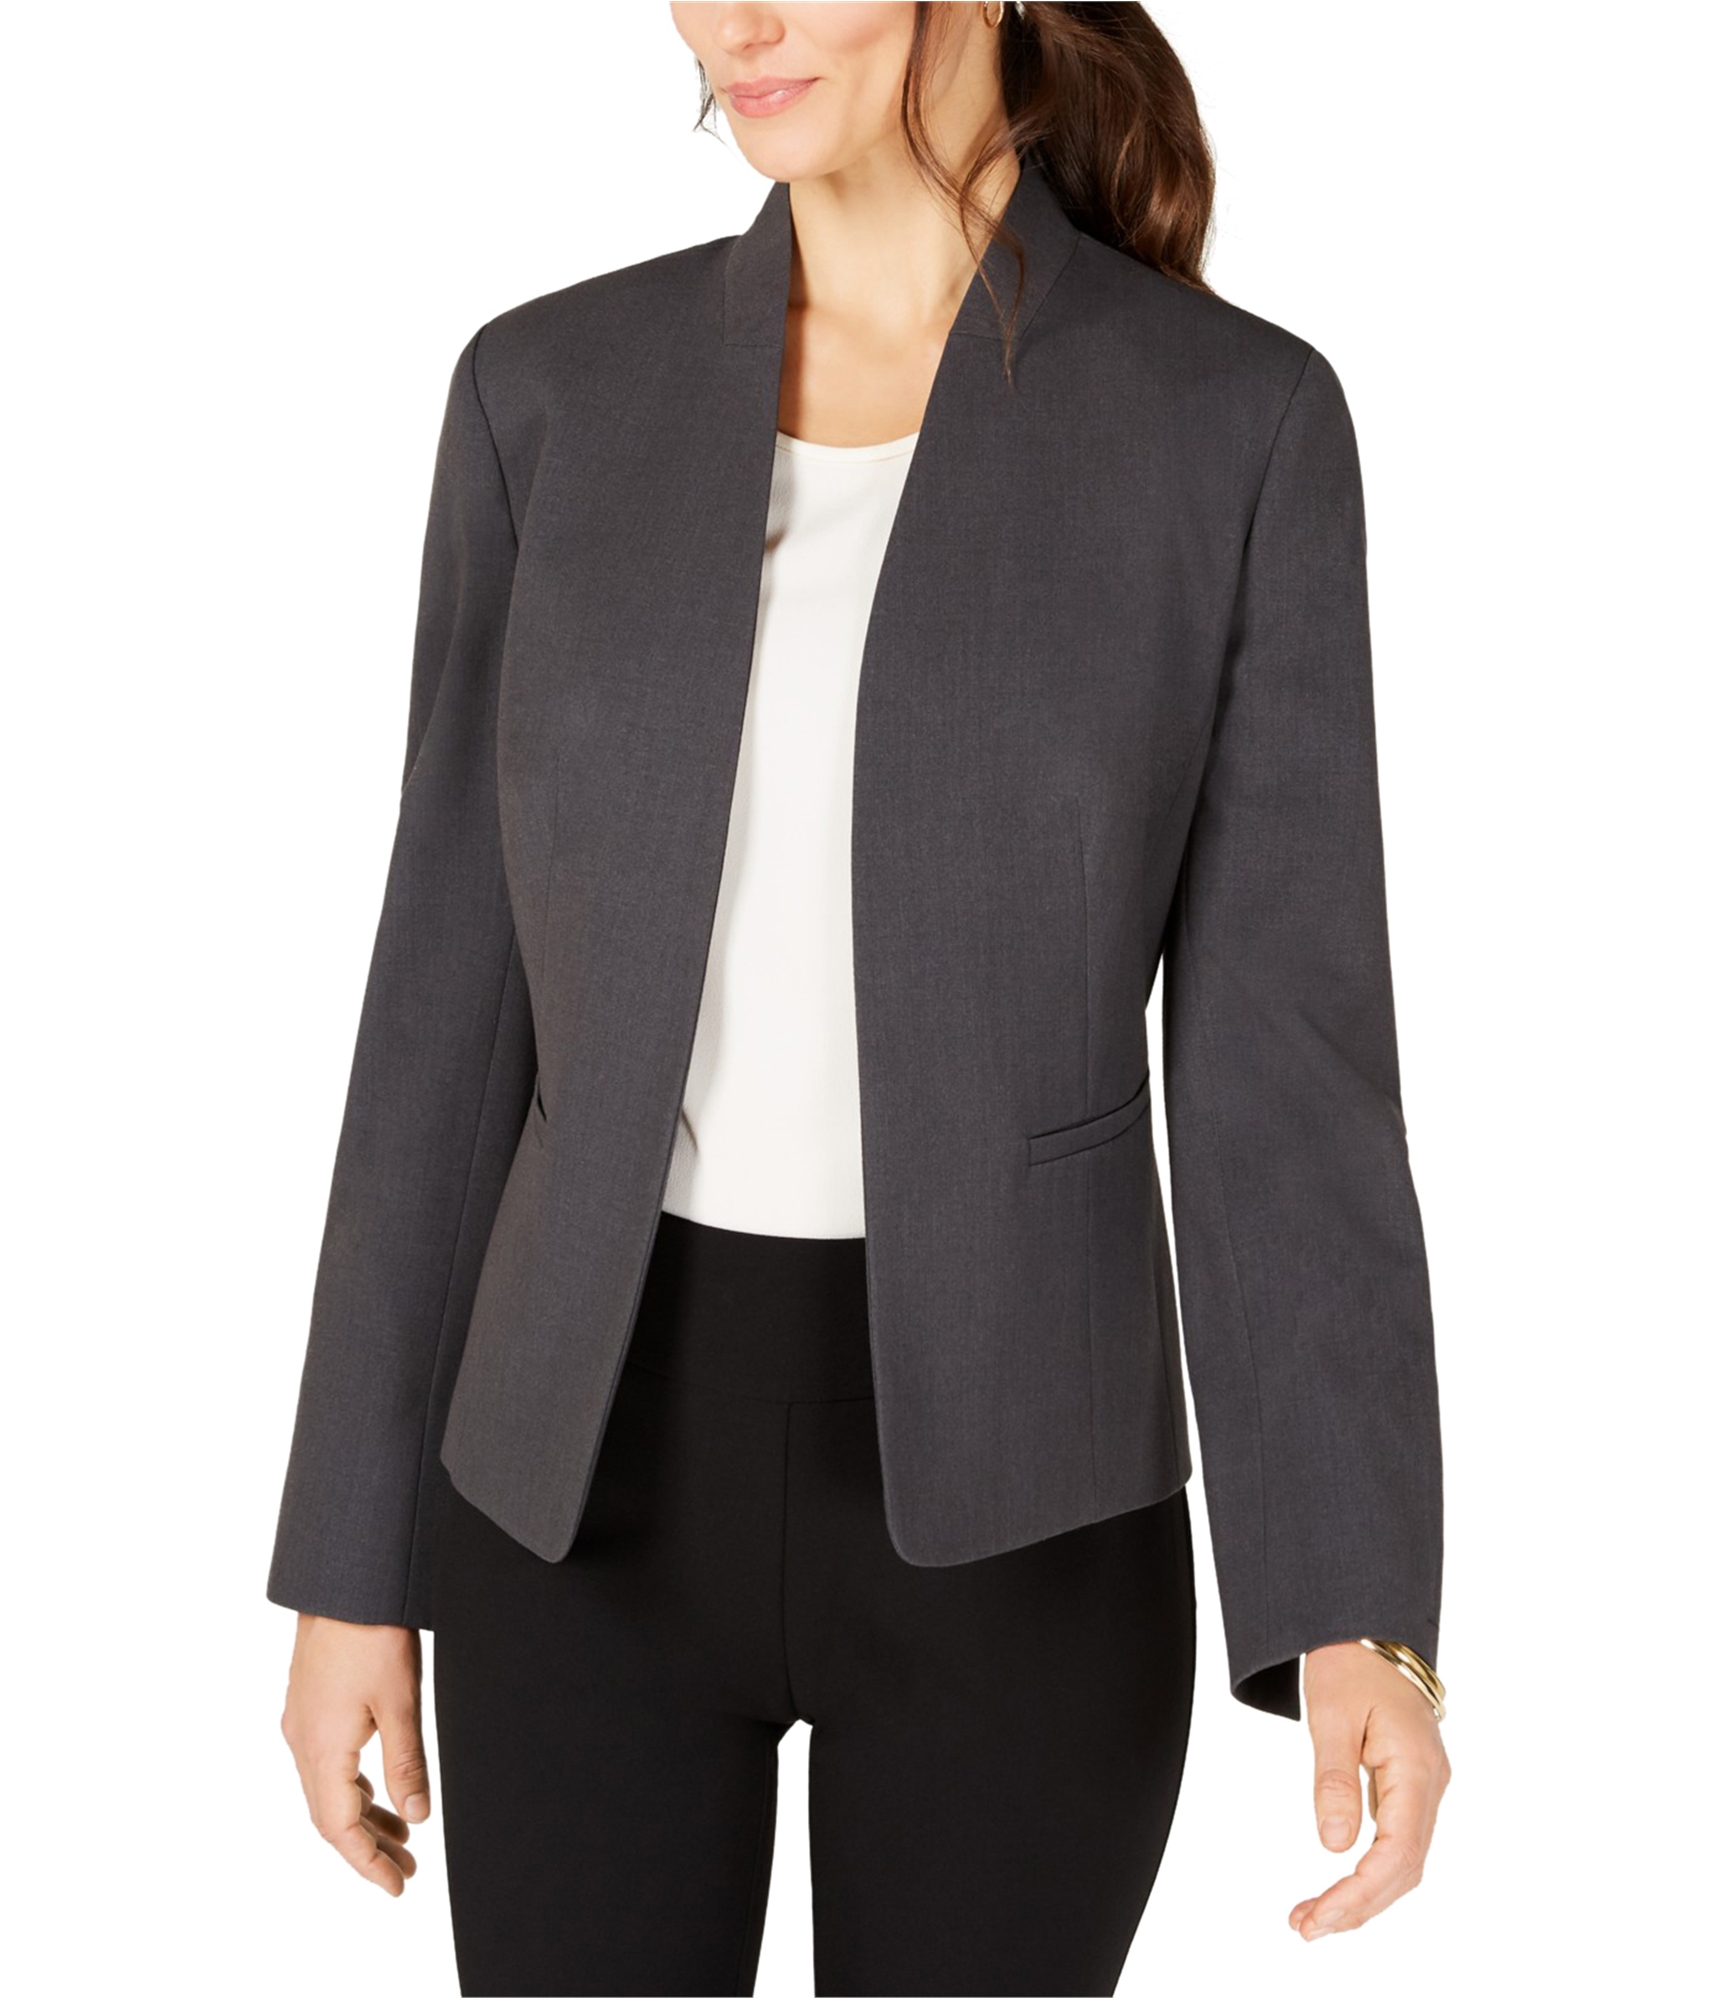 Nine West Womens Open Front Blazer Jacket, Grey, Large | eBay